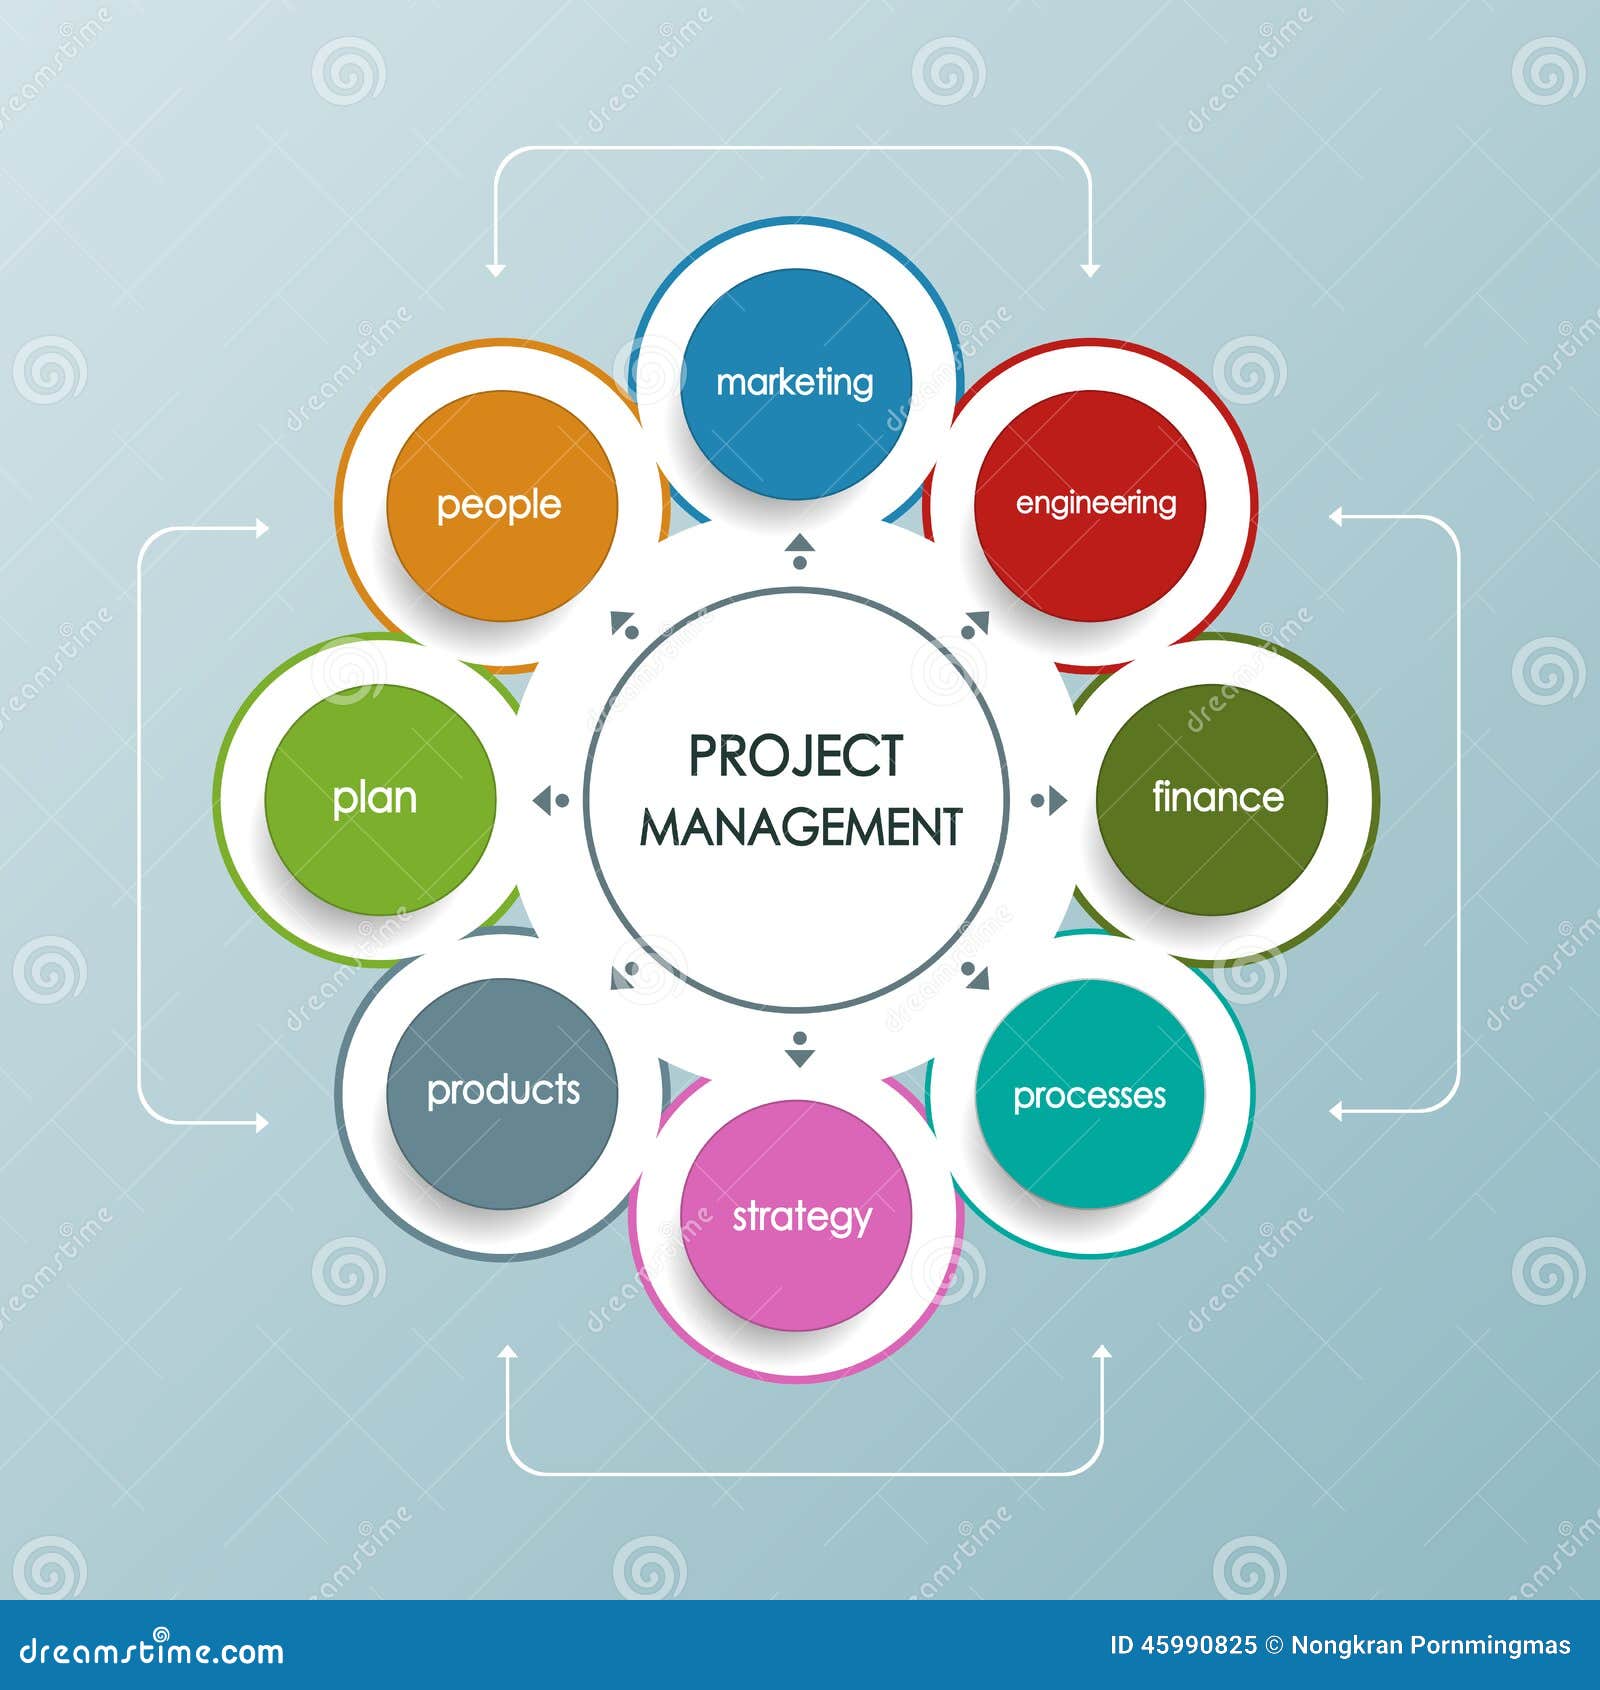 management plan business plan